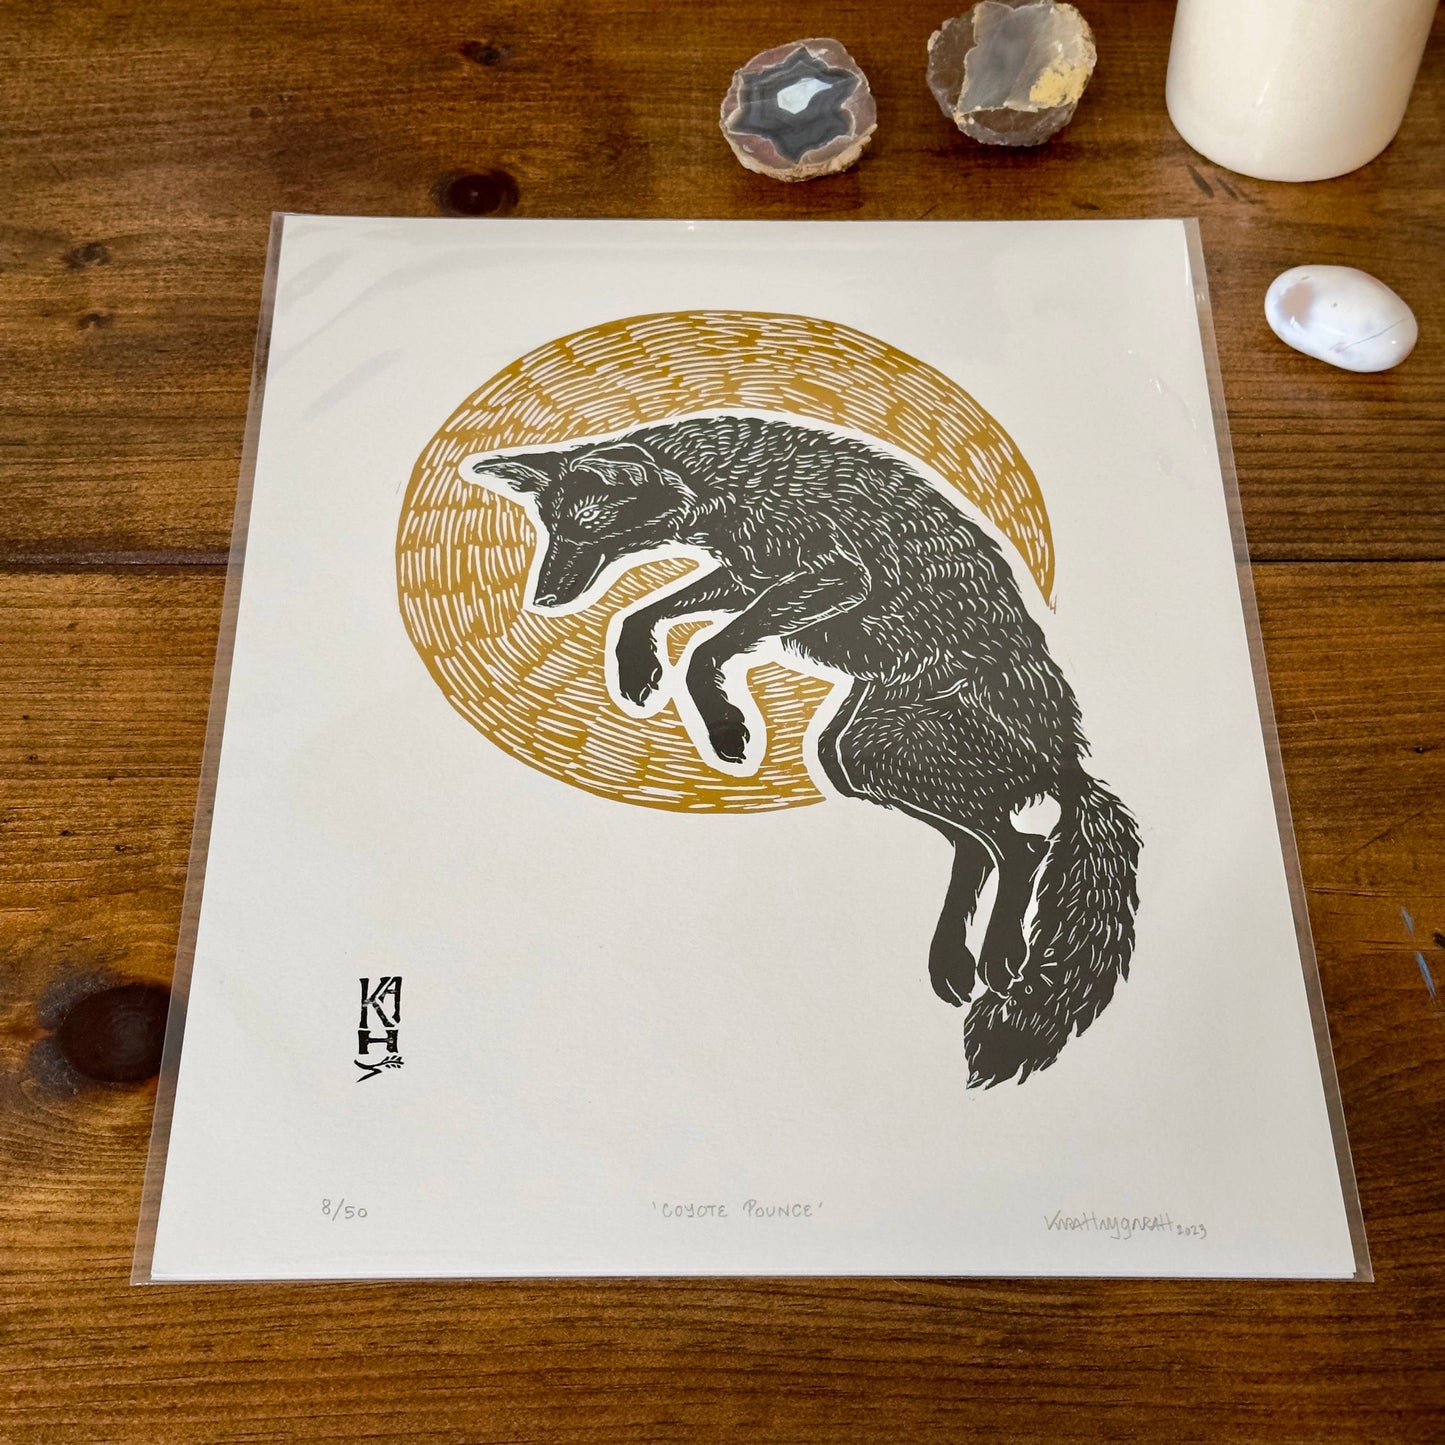 Coyote Pounce handmade relief print - 11x14 (Kara Haygarth)